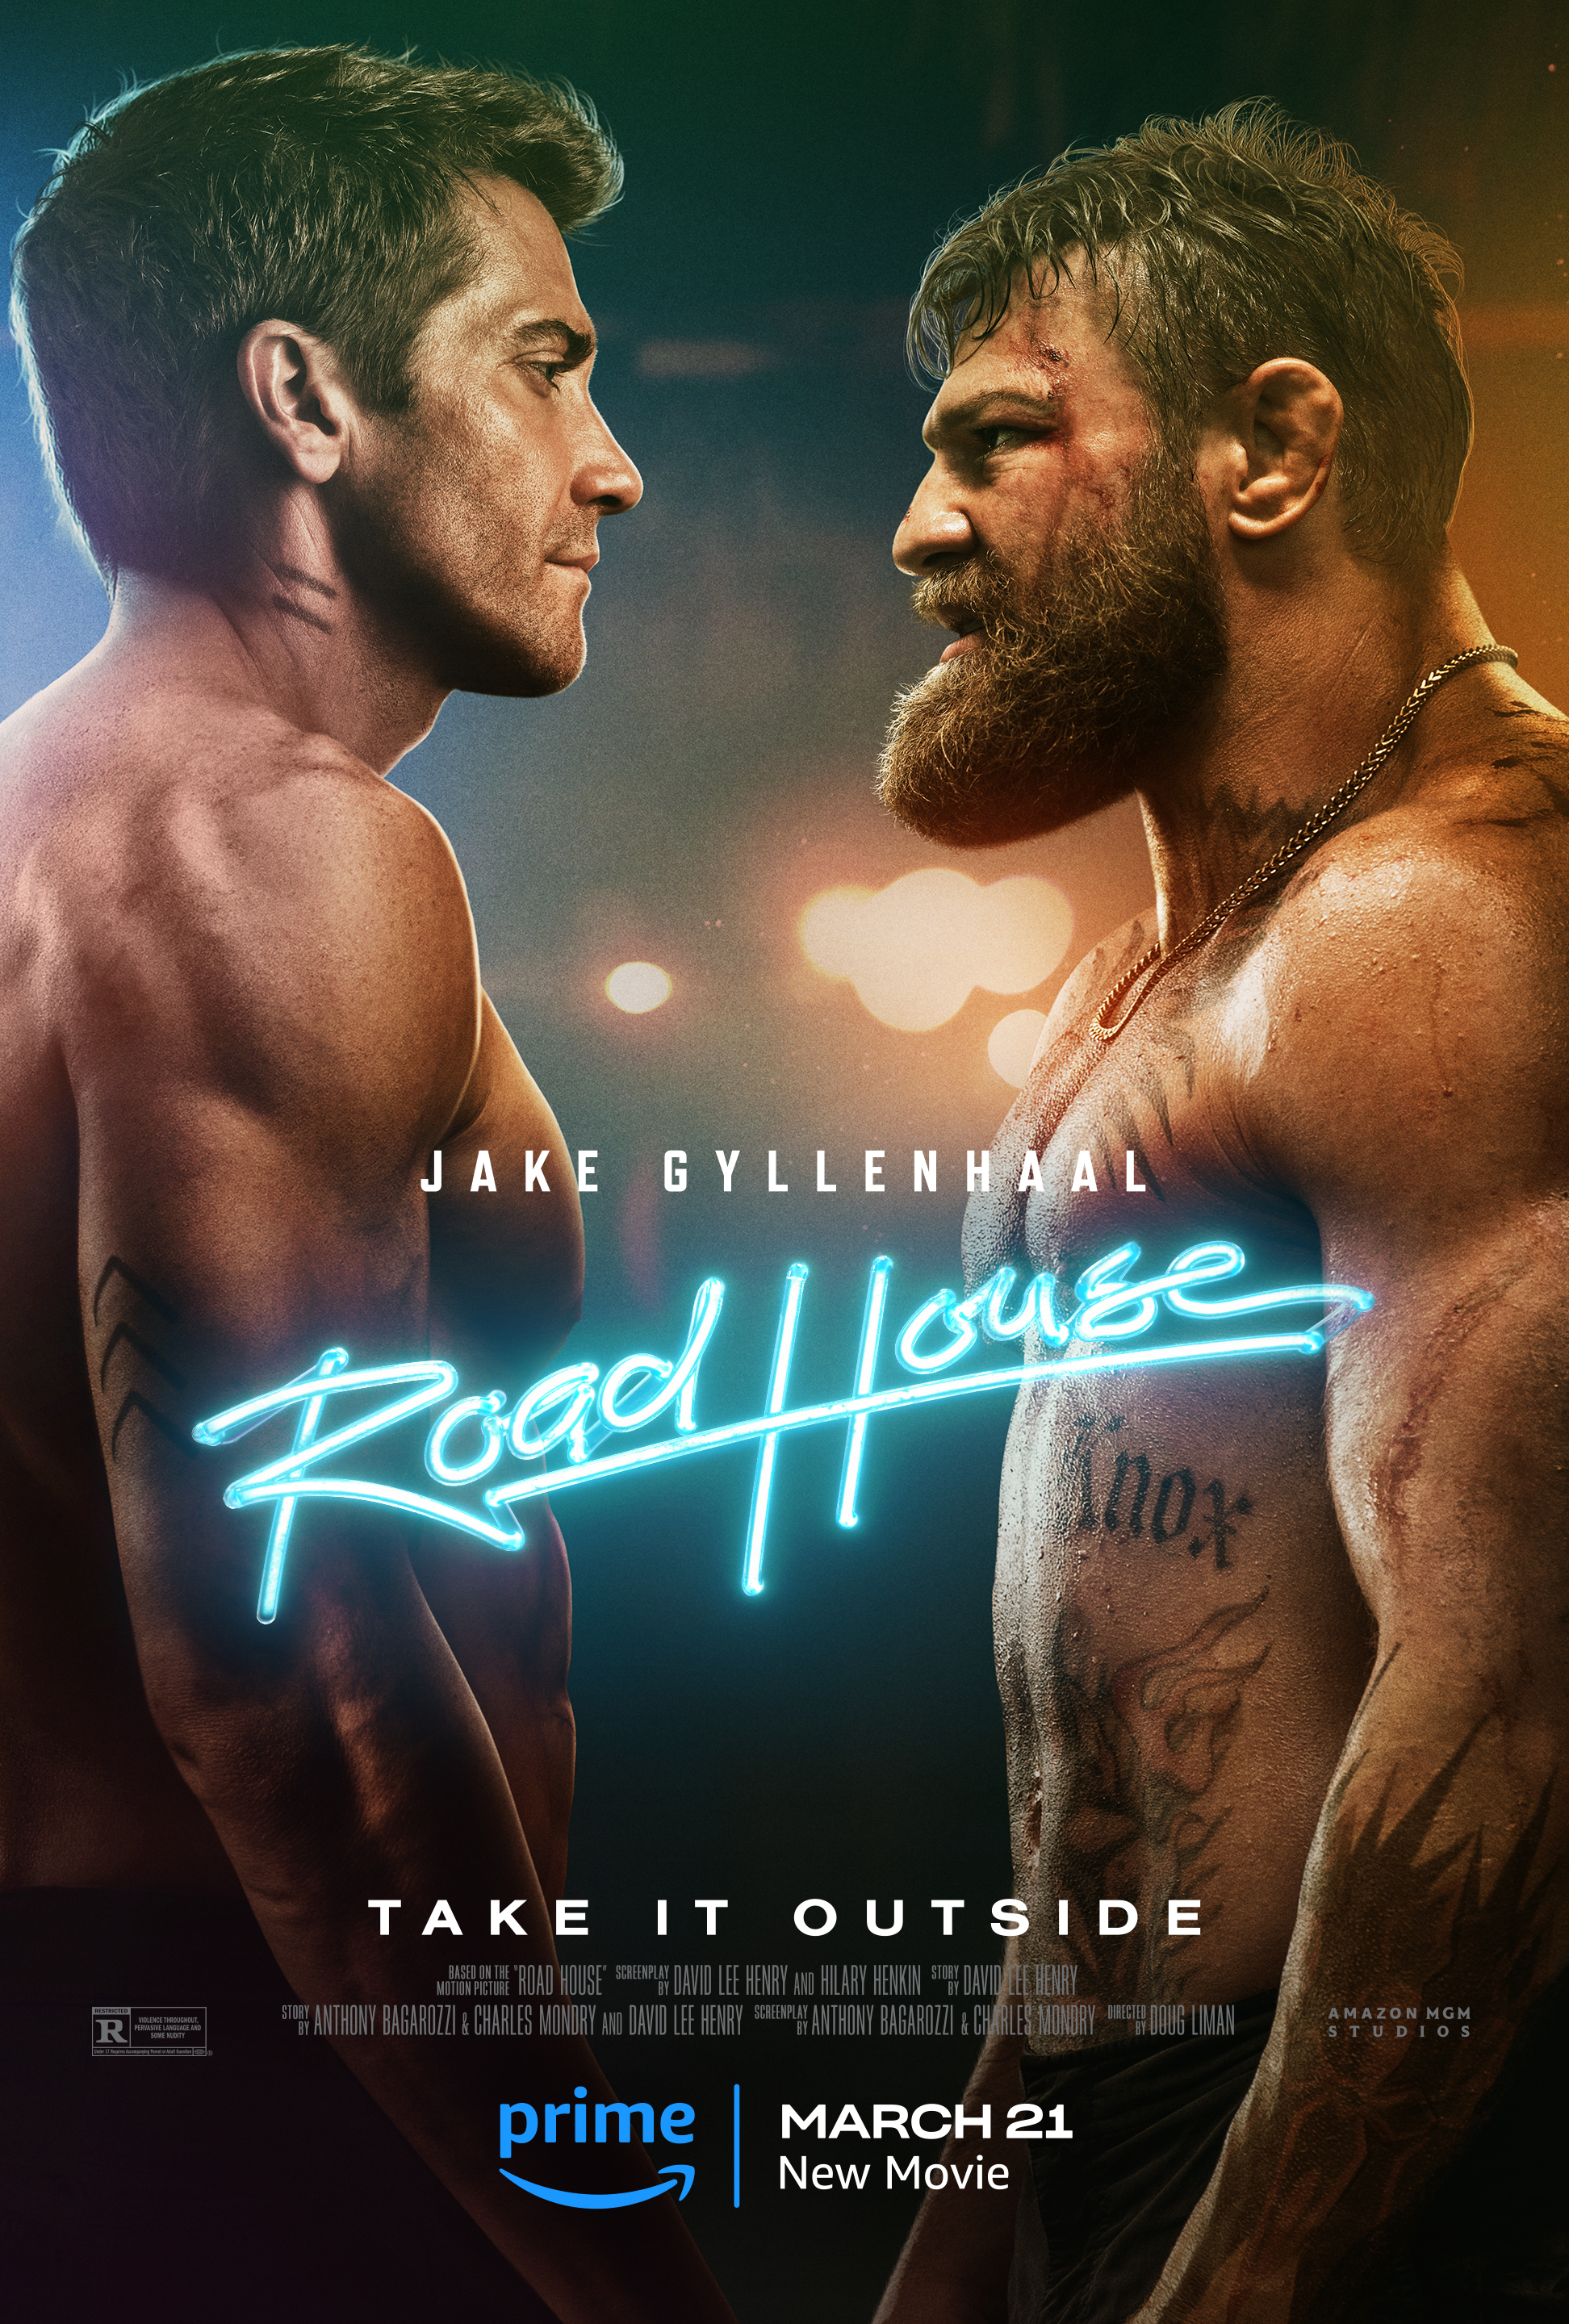 Jake Gyllenhaal, Conor McGregor, Road House